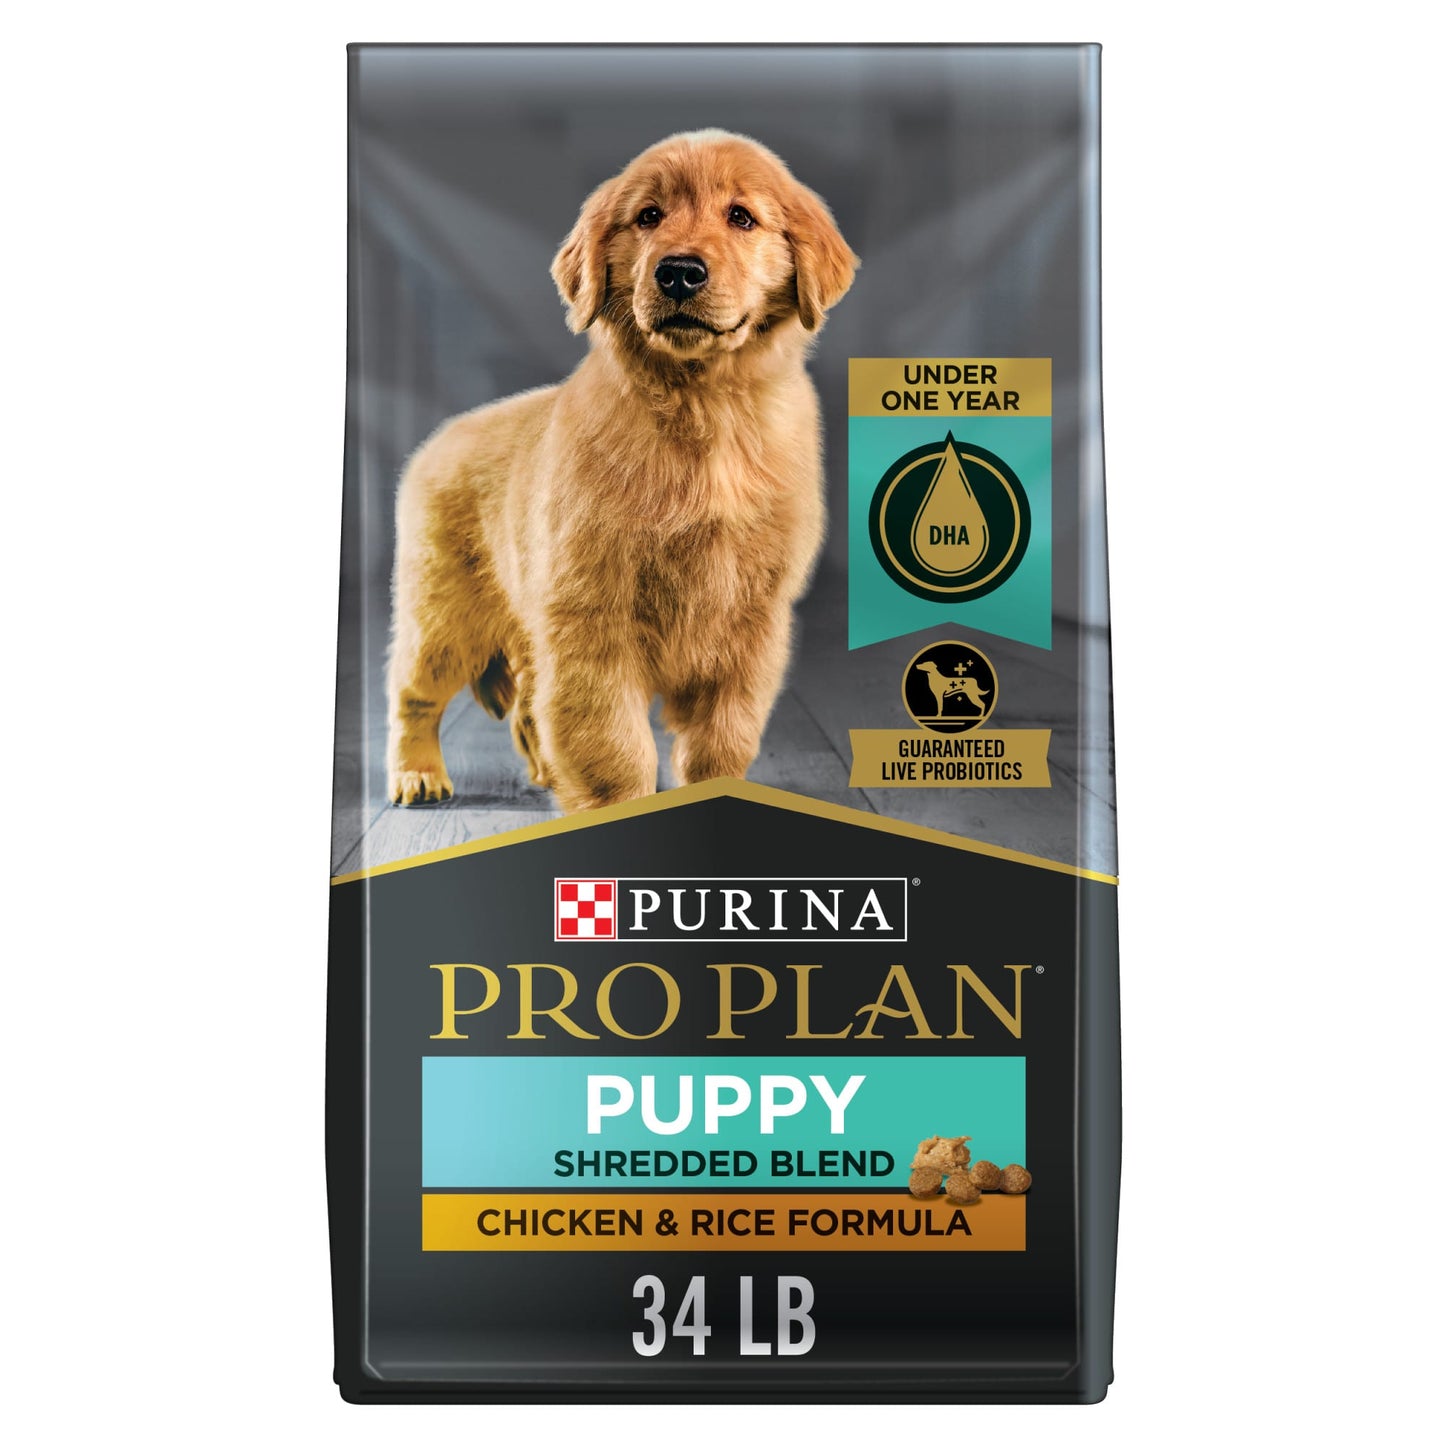 Purina Pro Plan High Protein Puppy Food Shredded Blend Chicken & Rice Formula  34 lb. Bag